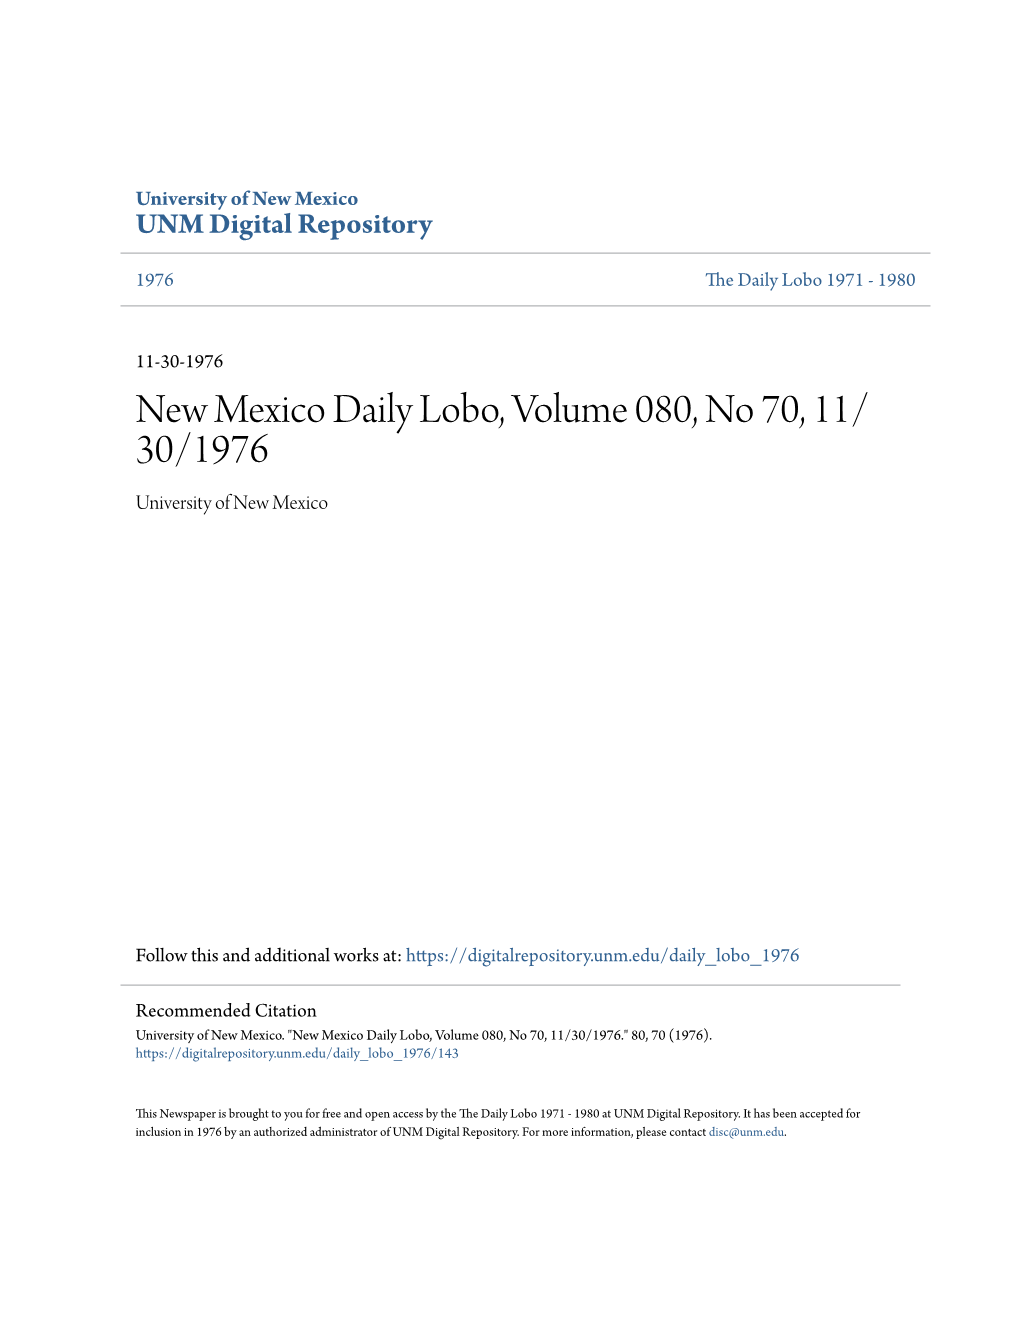 New Mexico Daily Lobo, Volume 080, No 70, 11/30/1976." 80, 70 (1976)